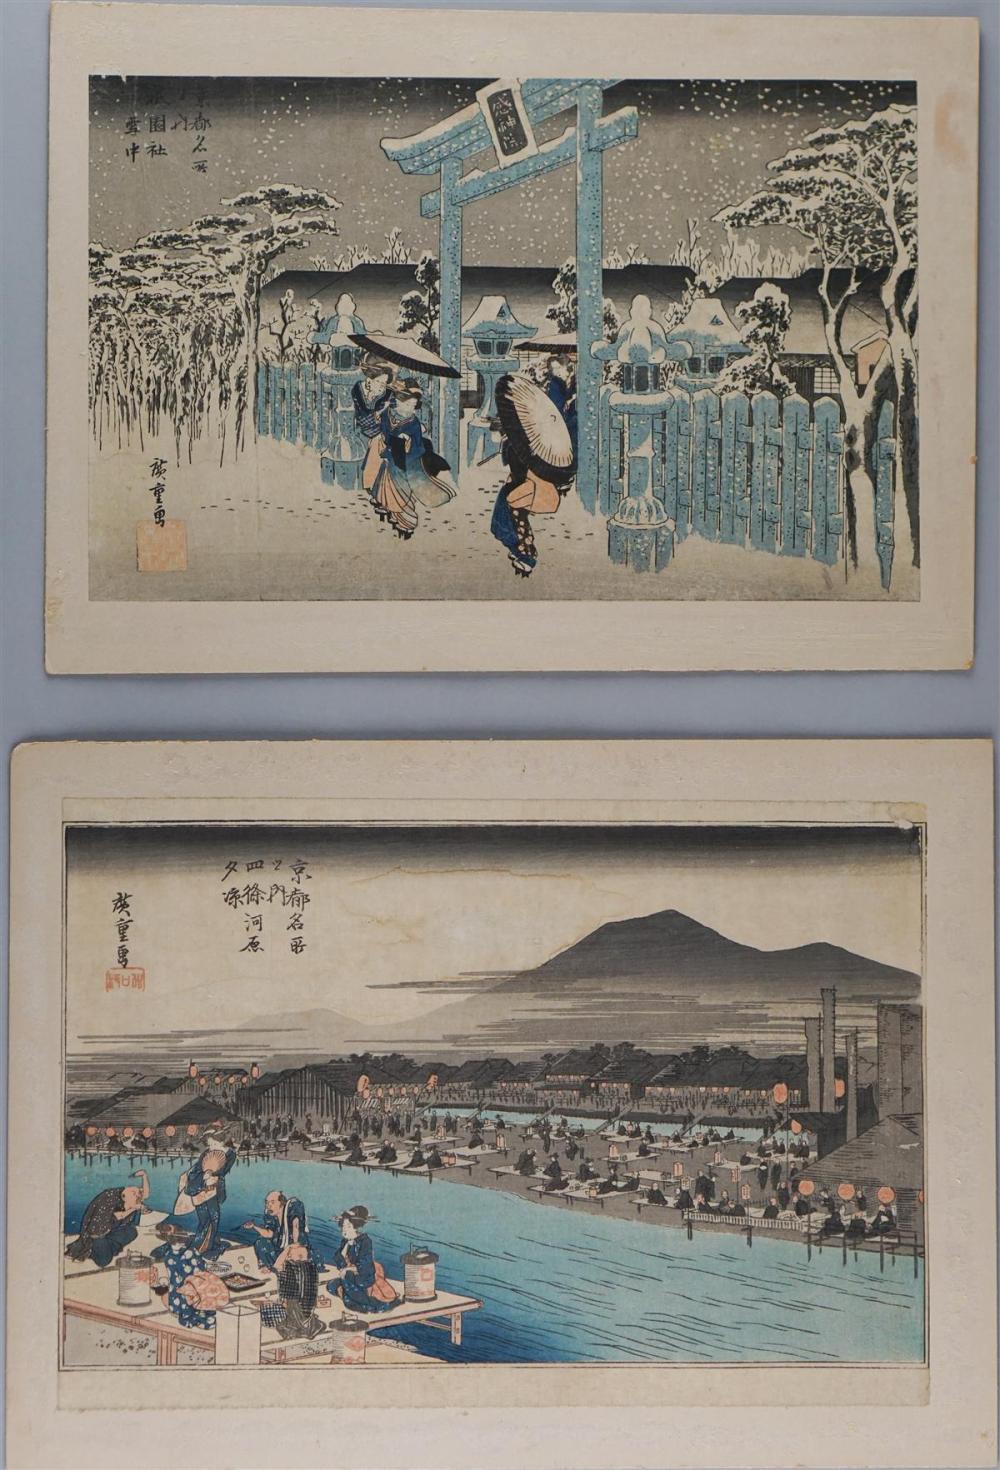 UTAGAWA HIROSHIGE (JAPANESE, 1797-1858)